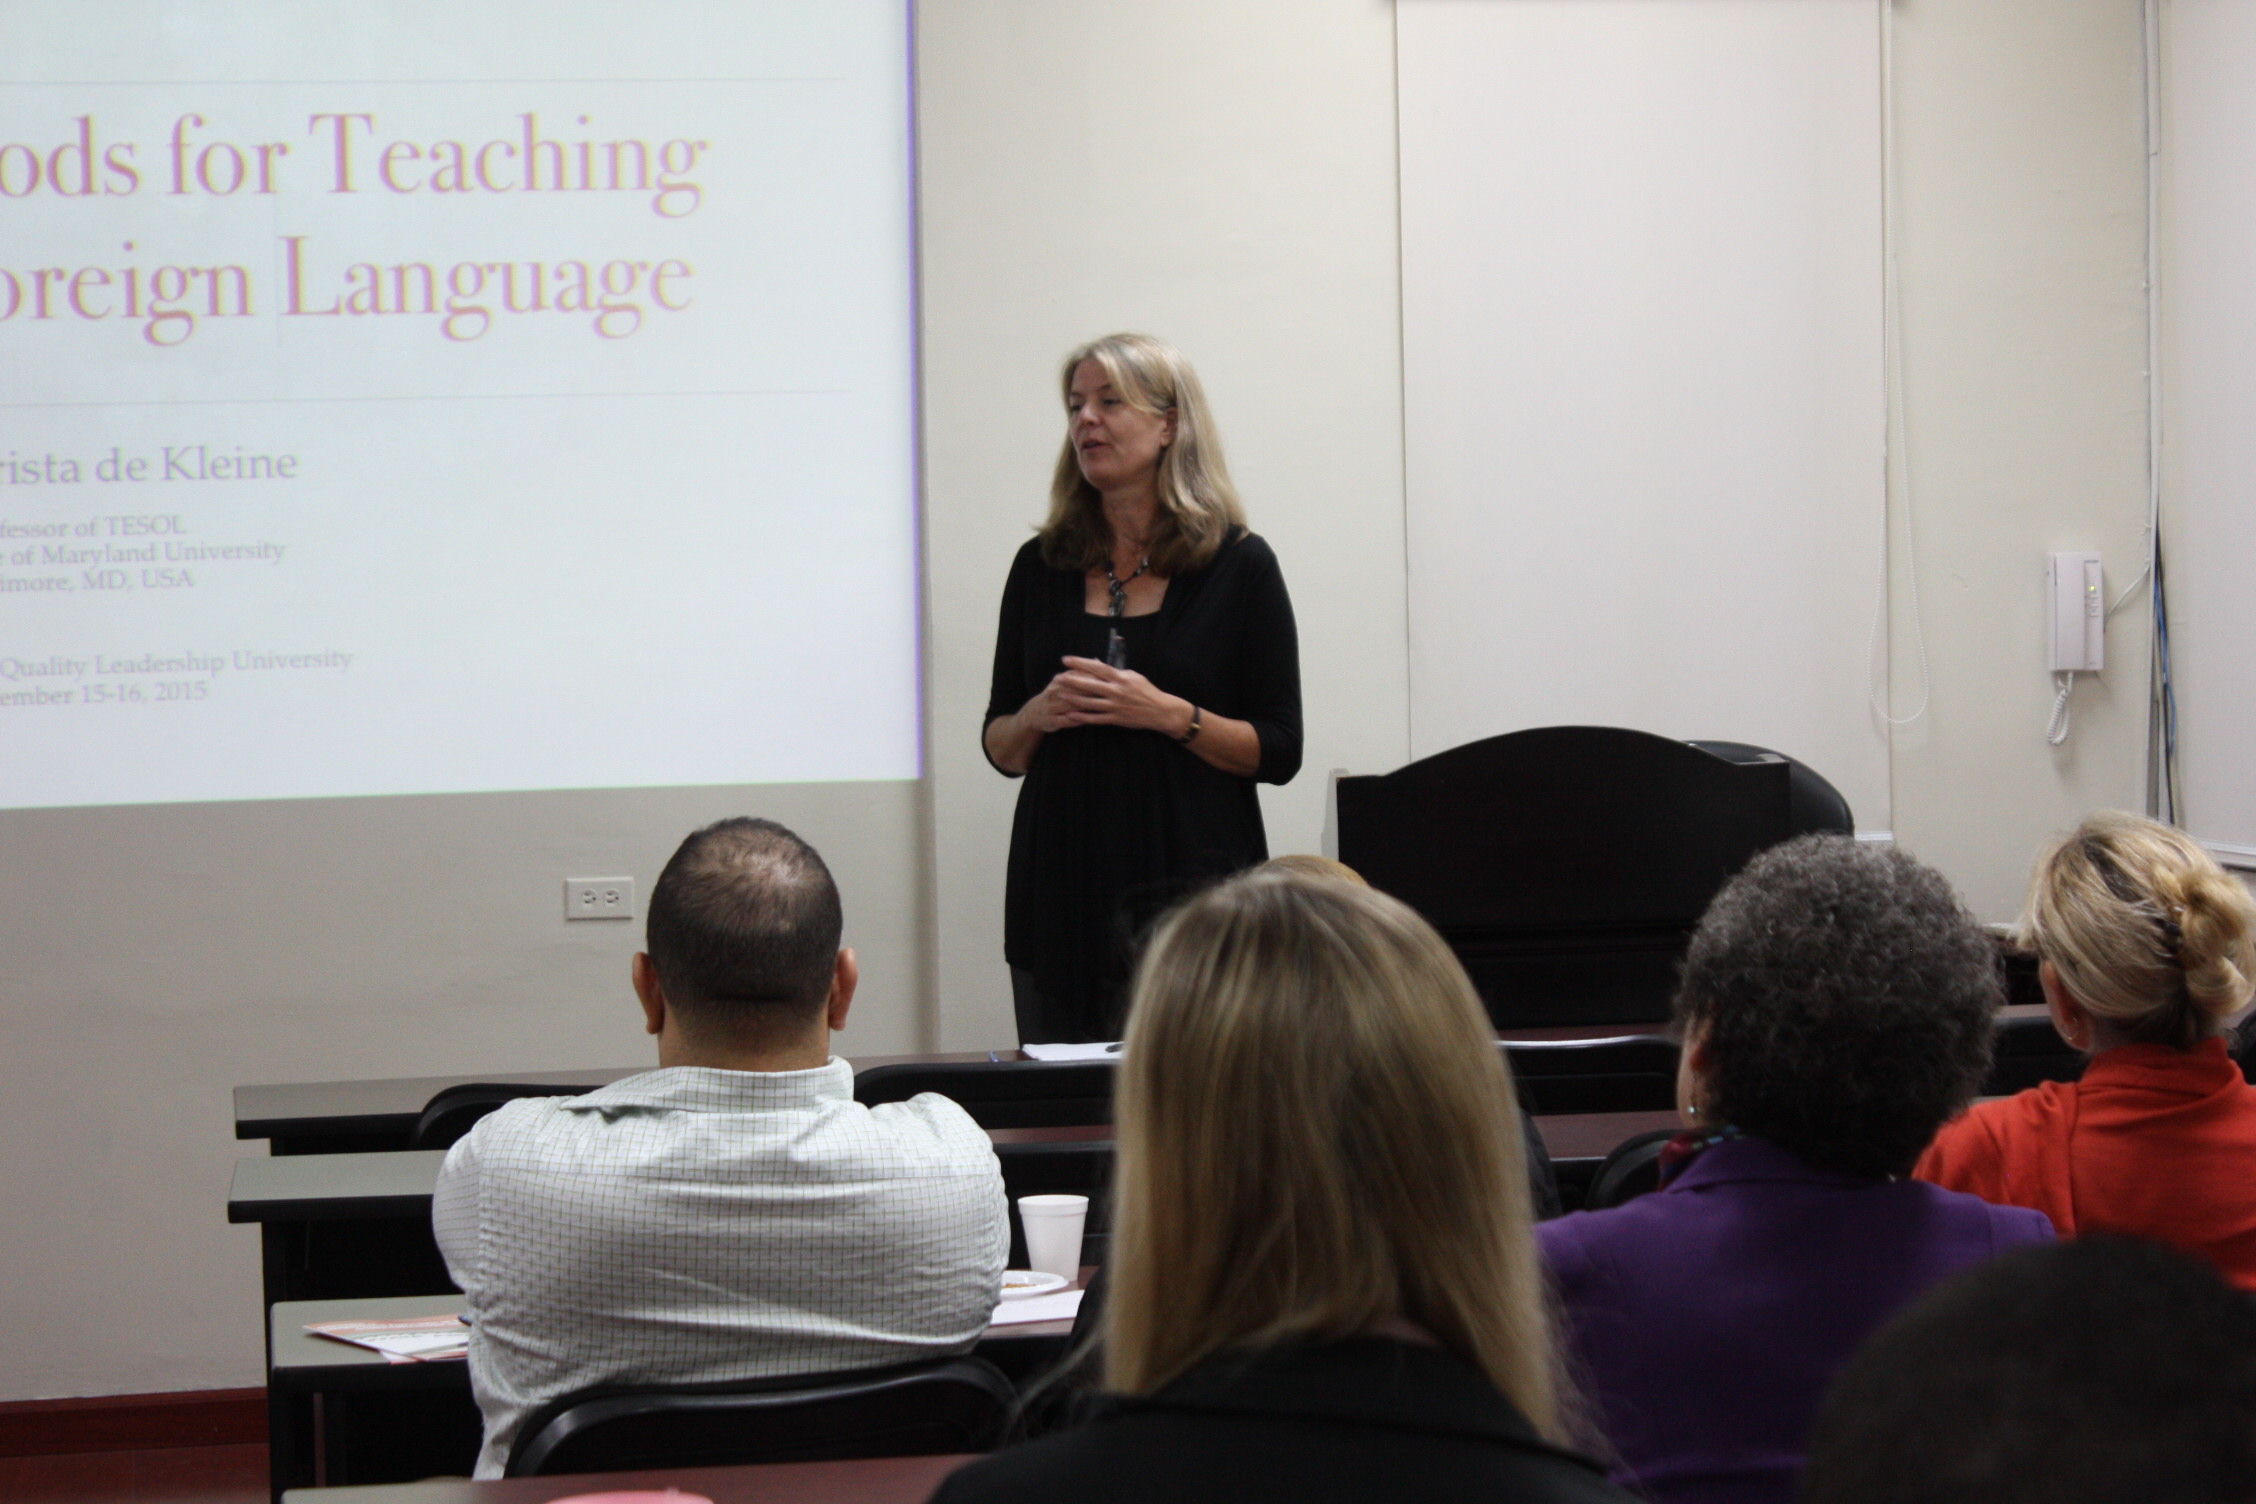 Conferencia Effective Methods for Teaching English Christa de Kleine profesora de TESOL Panama